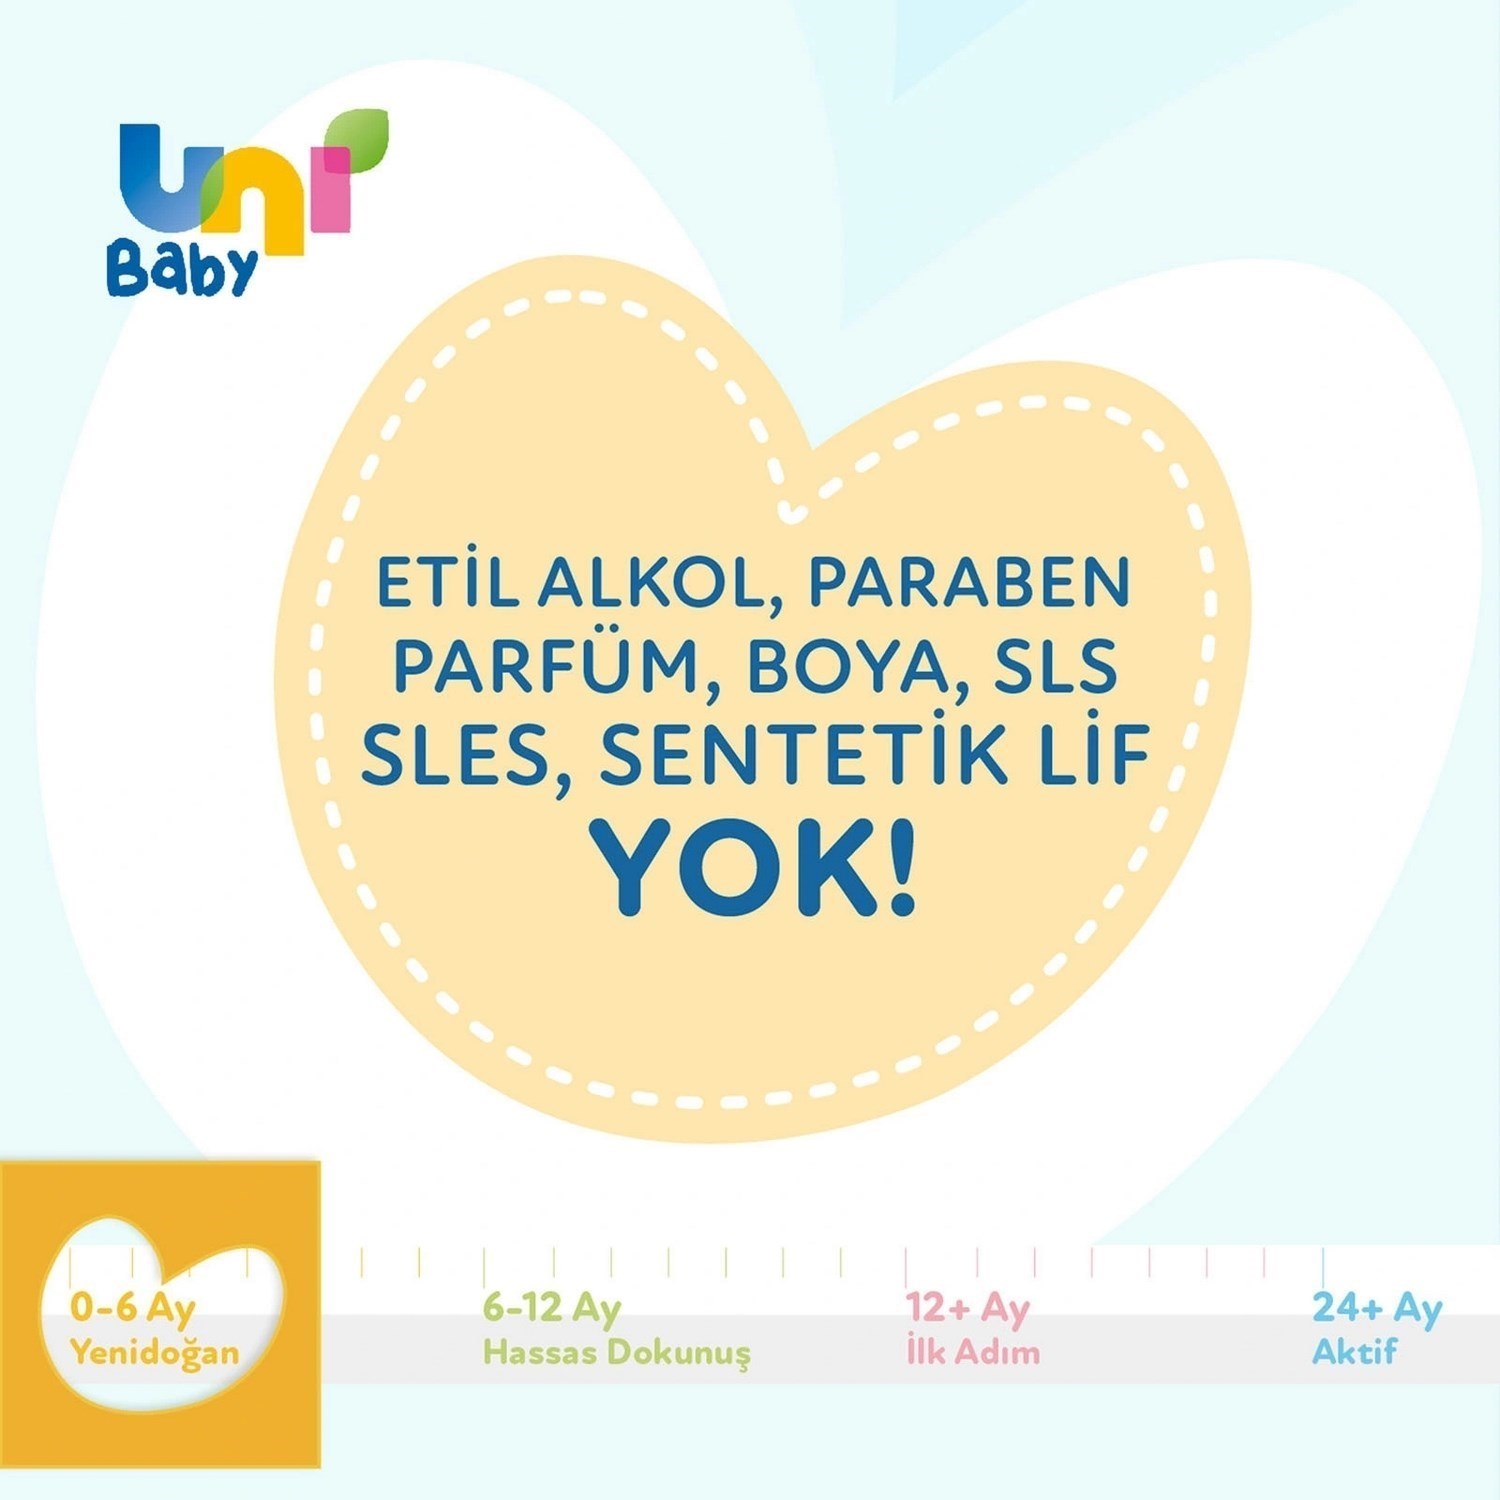 Uni Baby Yenidoğan Natural Islak Mendil 12X40 Adet 0-6 Ay 